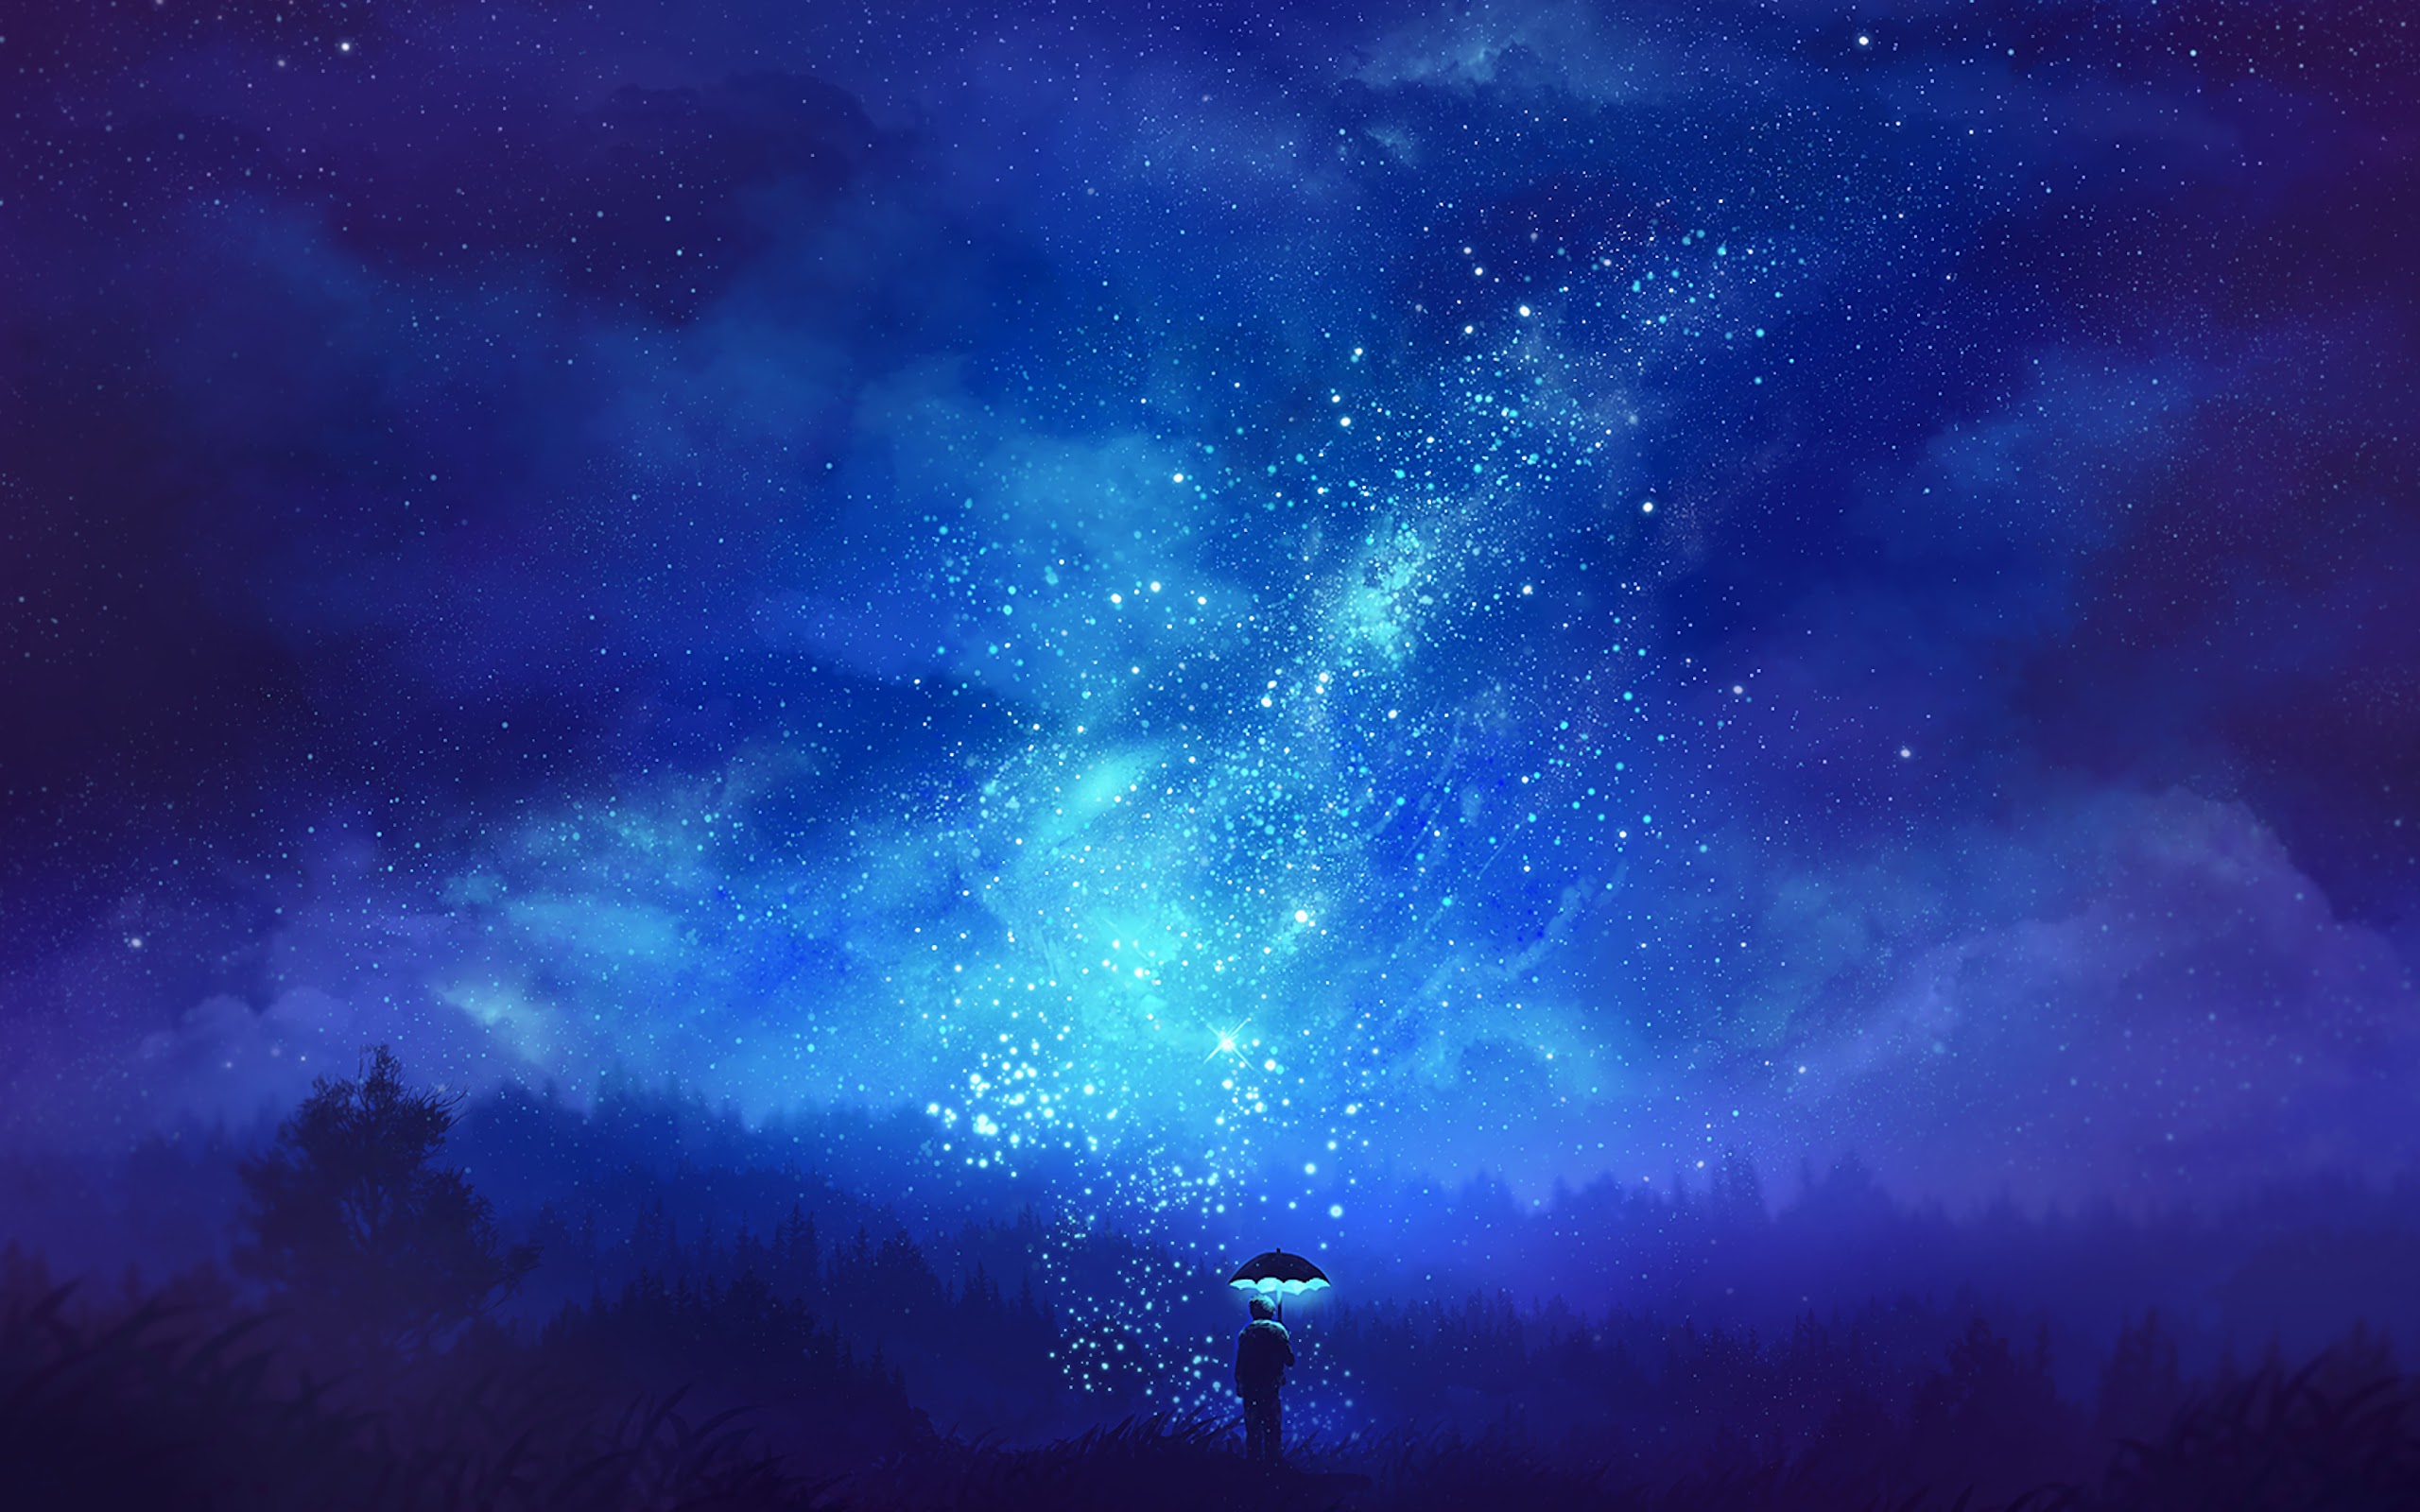 Night Sky Stars Scenery Anime PC DeskK Wallpaper free Download